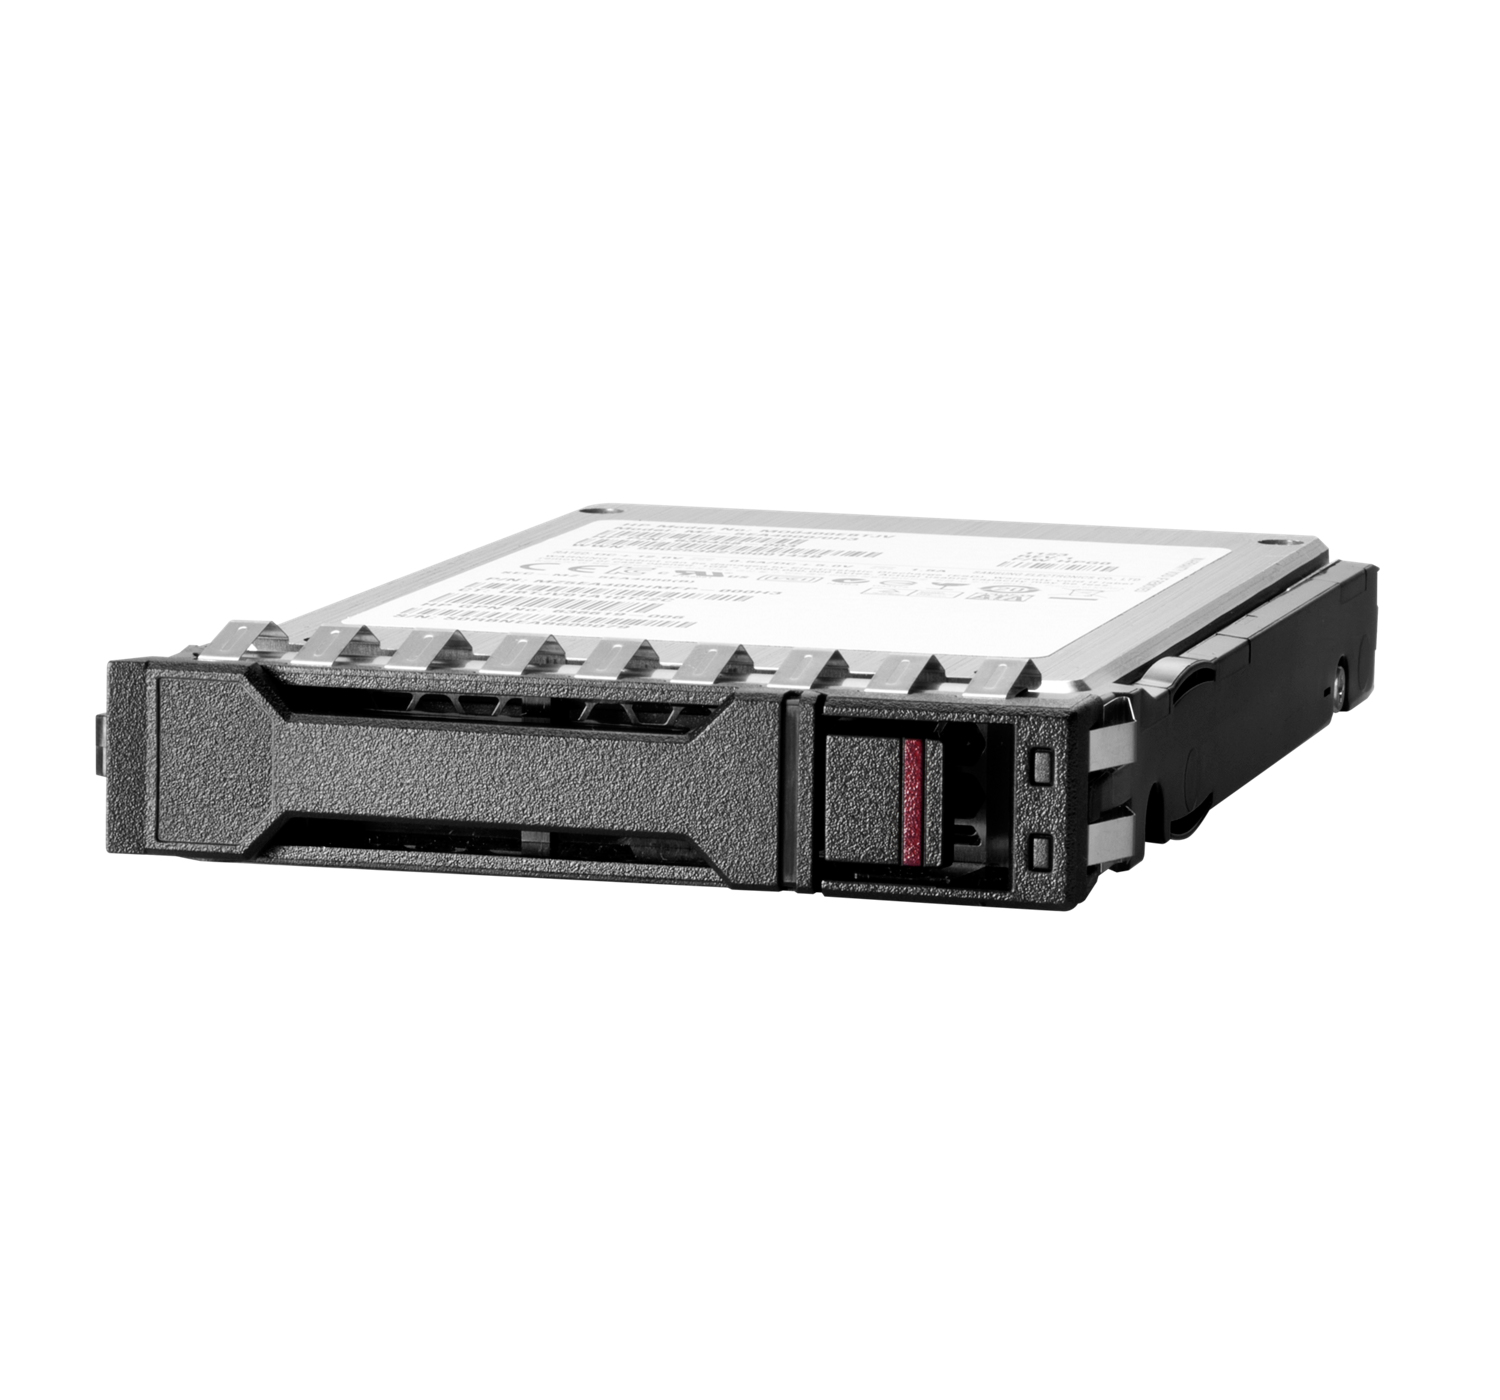 HPE SSD - Read Intensive - 1.92 TB - Hot-Swap - 2.5" SFF (6.4 cm SFF)